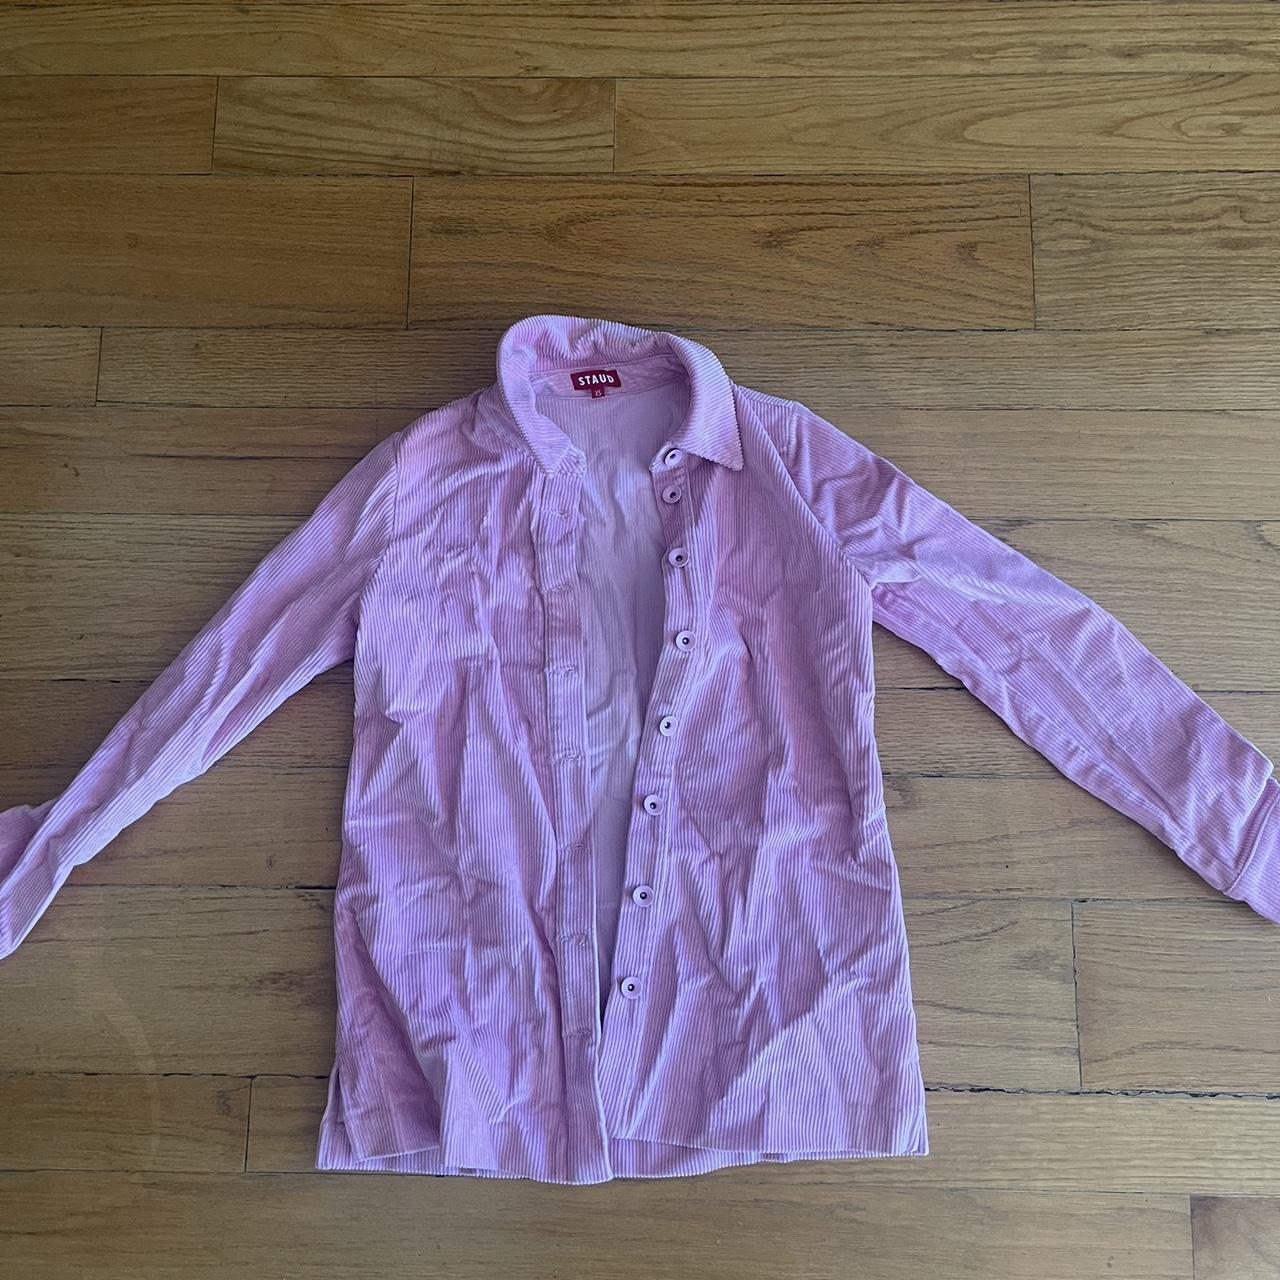 Staud pink corduroy jacket - Depop